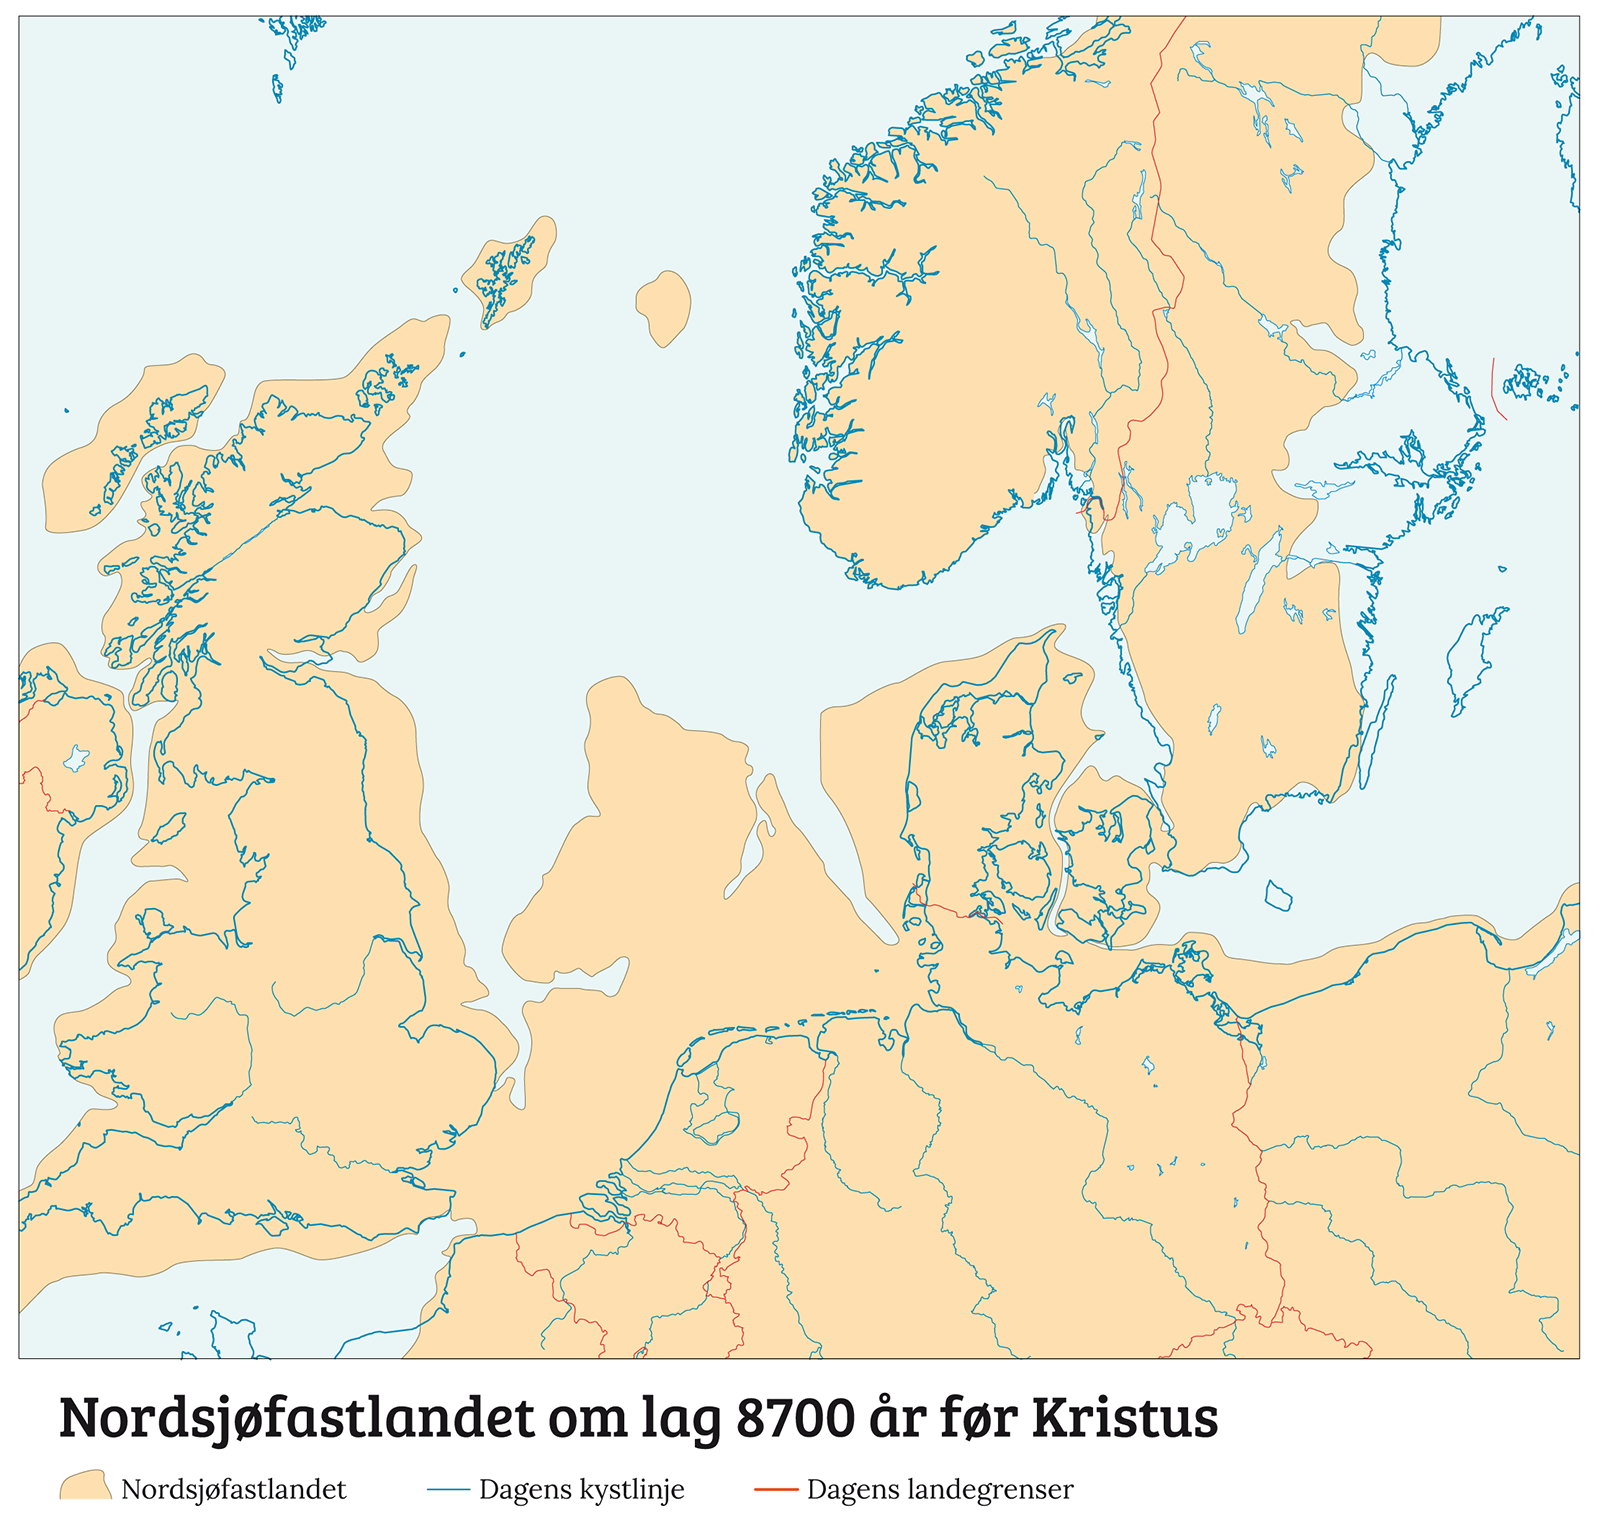 kart som viser nordsjøfastlandet 8700 år før kristus. Me ser fastlandsforbindelse mellom Sotrbritannia og kontinenetet, eit stort Danmark og eit nokså oversvømt Sverige.